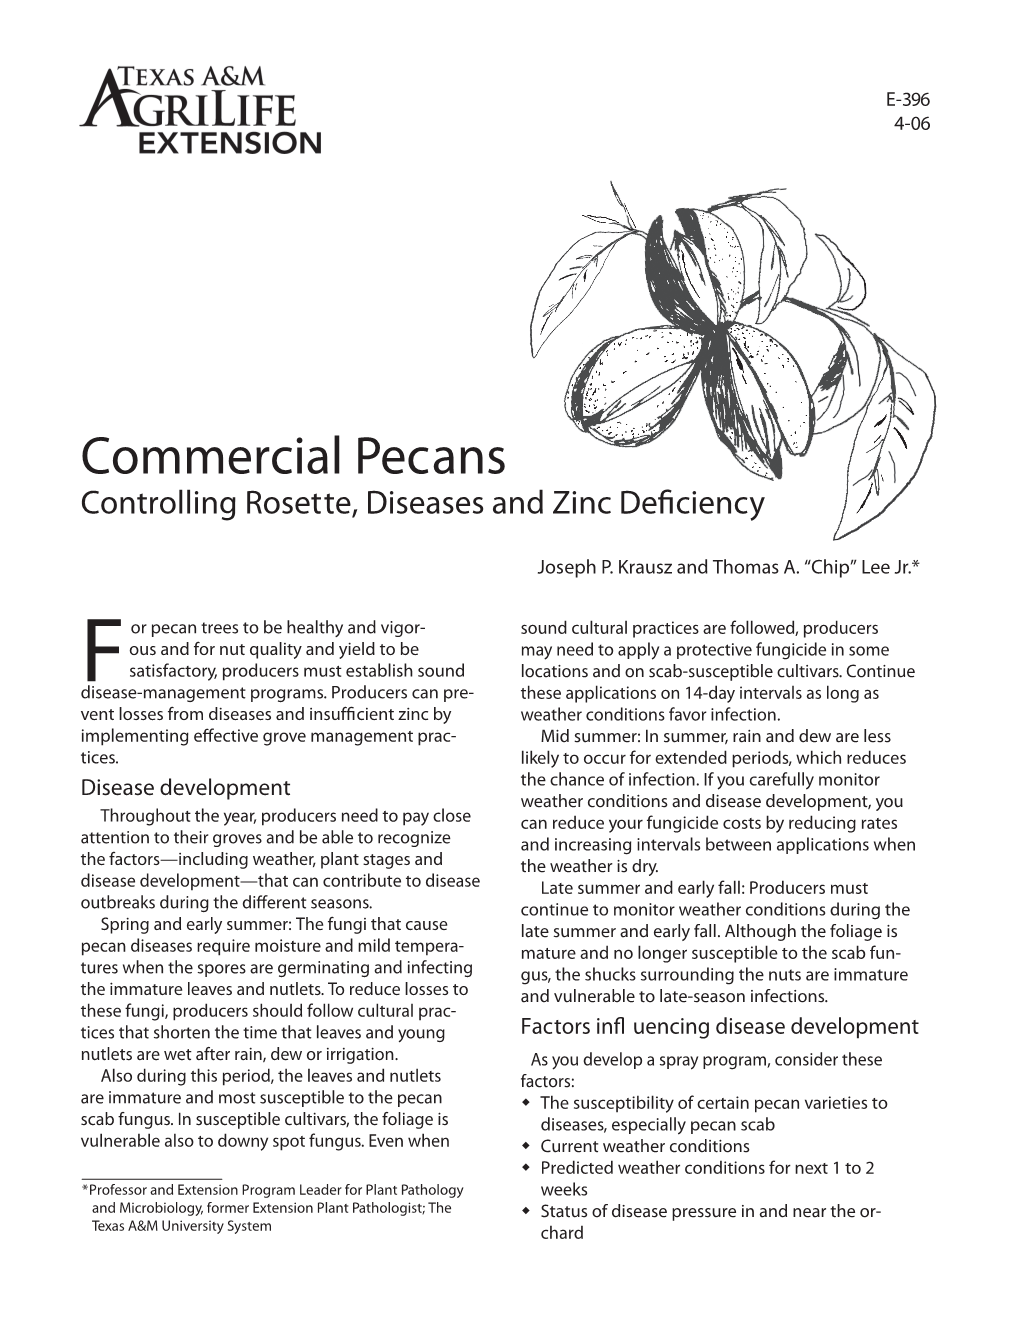 Commercial Pecans: Controlling Rosette, Diseases and Zinc